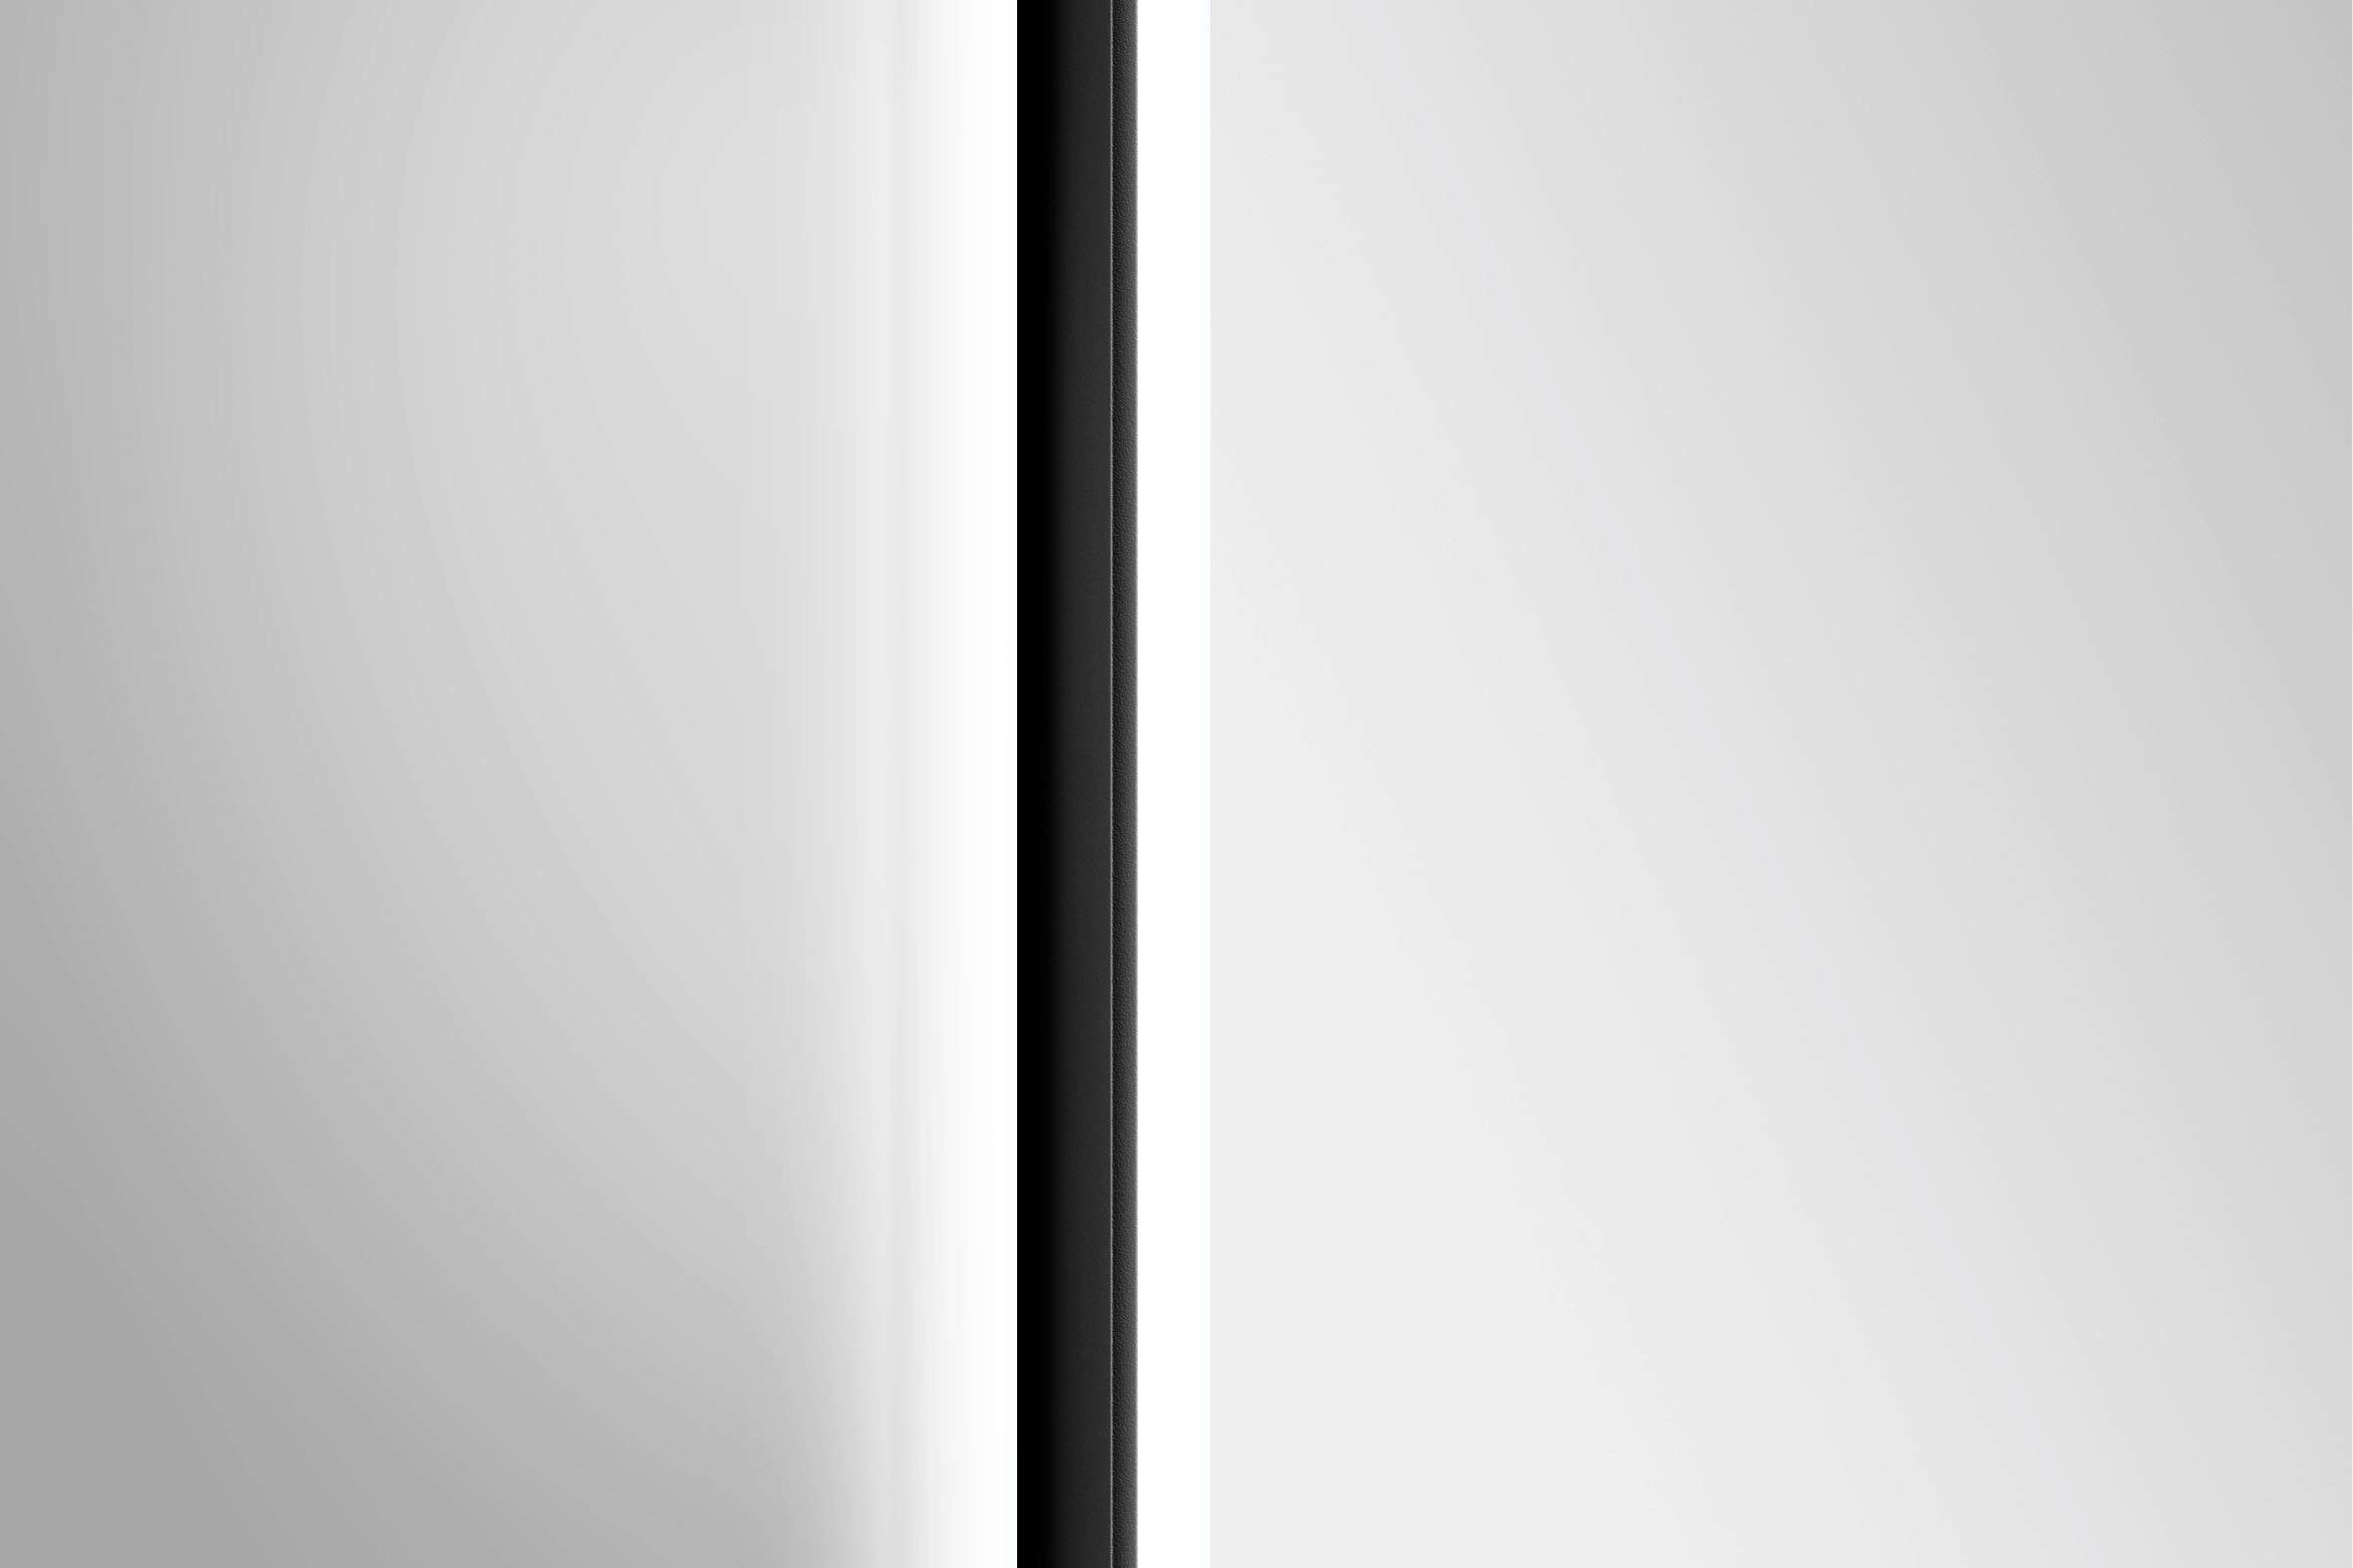 Talos Badspiegel »Talos Black Moon«, 80 x 60 cm, Design Lichtspiegel